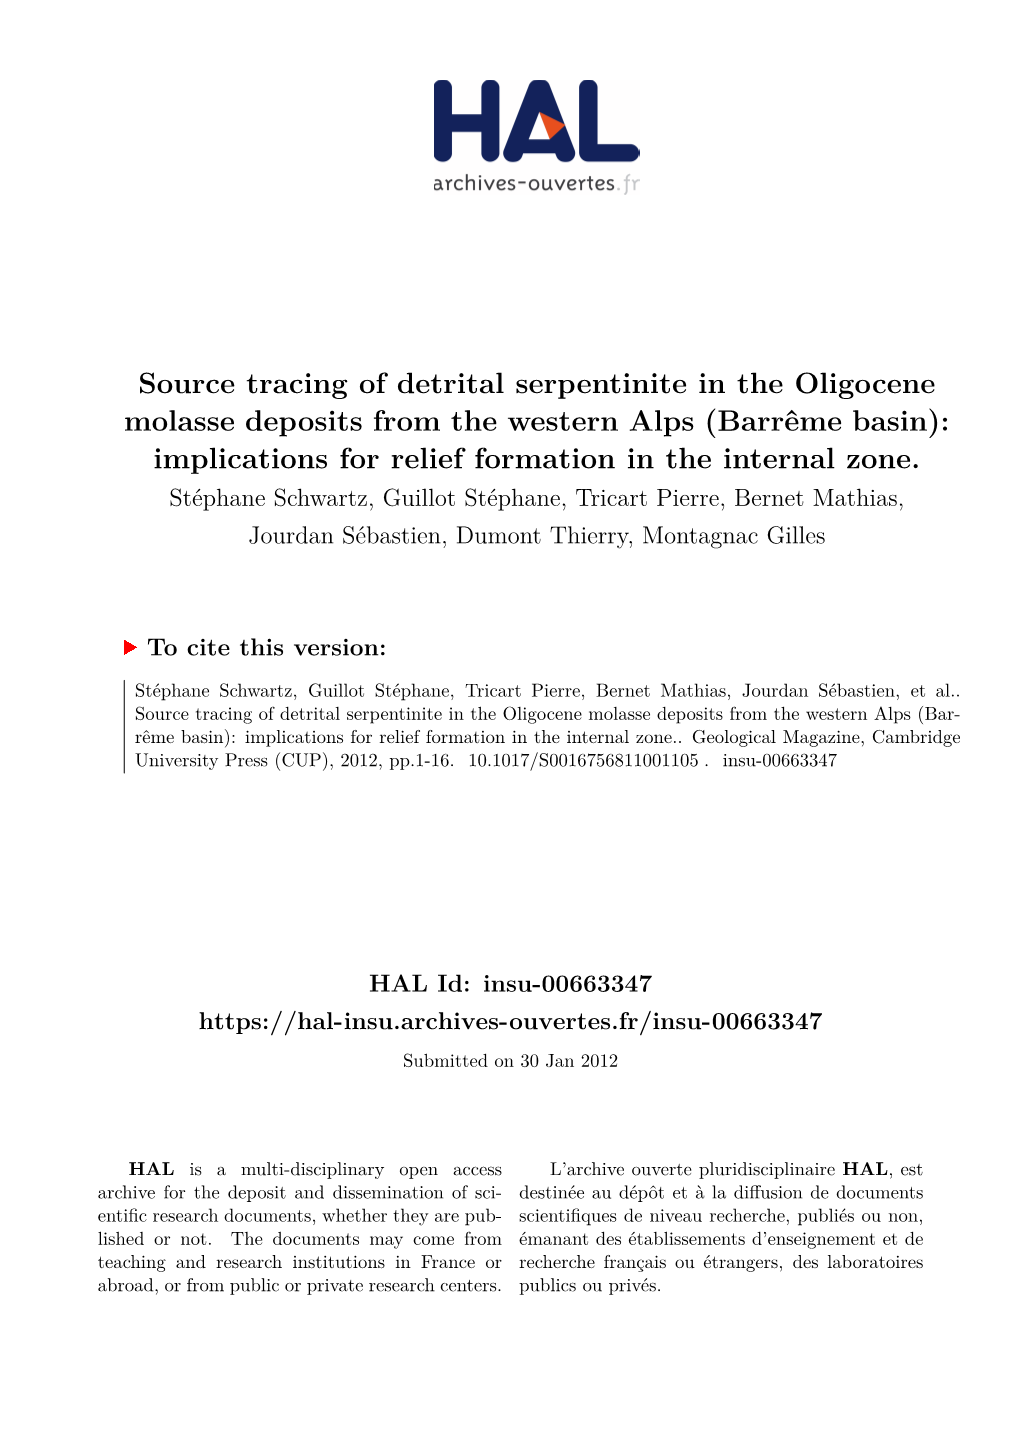 Source Tracing of Detrital Serpentinite in the Oligocene Molasse Deposits